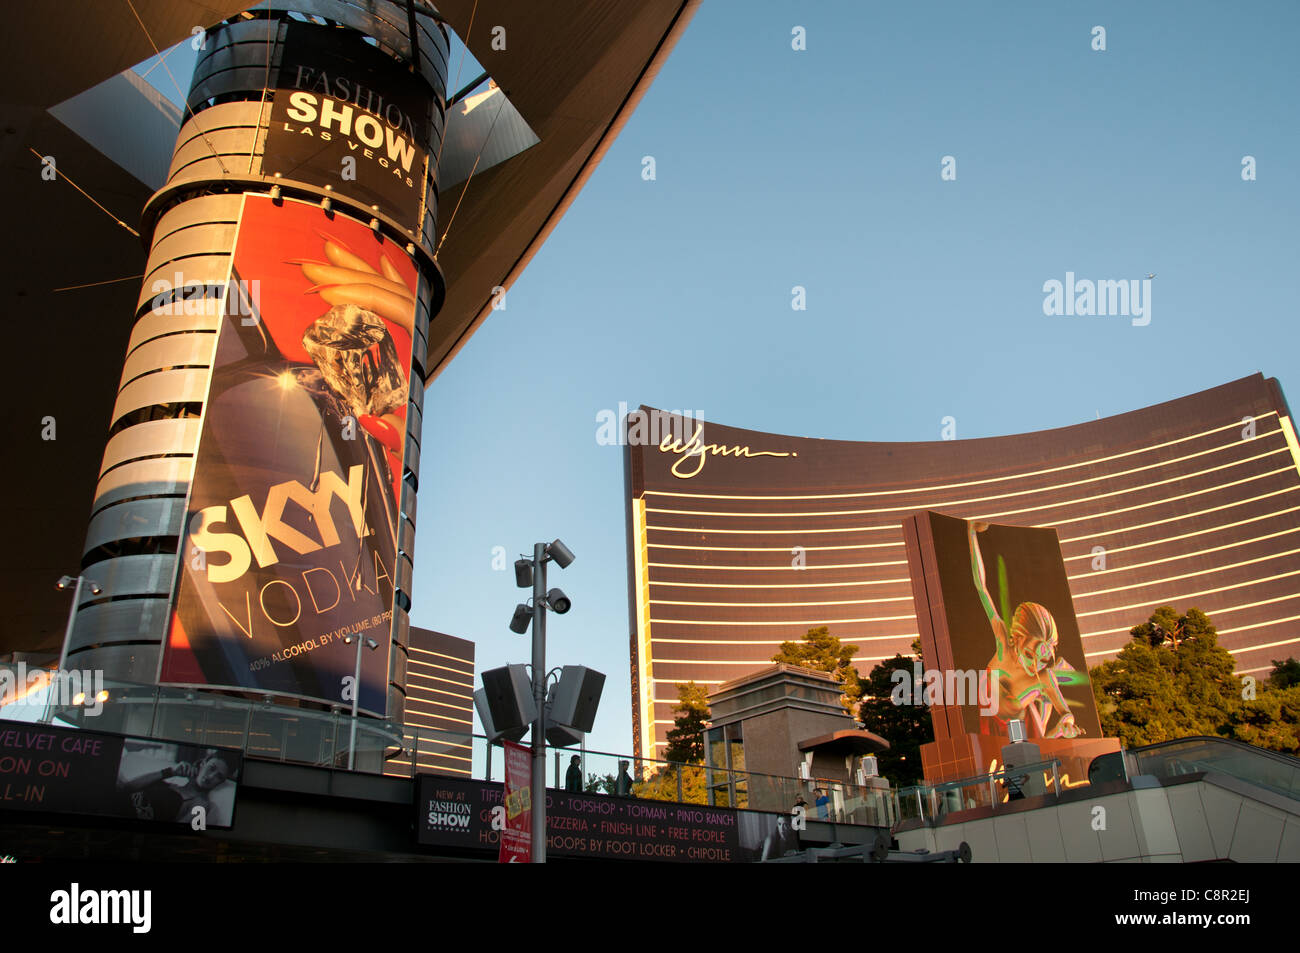 Las Vegas Fashion show mall strip United States Skyy Vodka Stock Photo